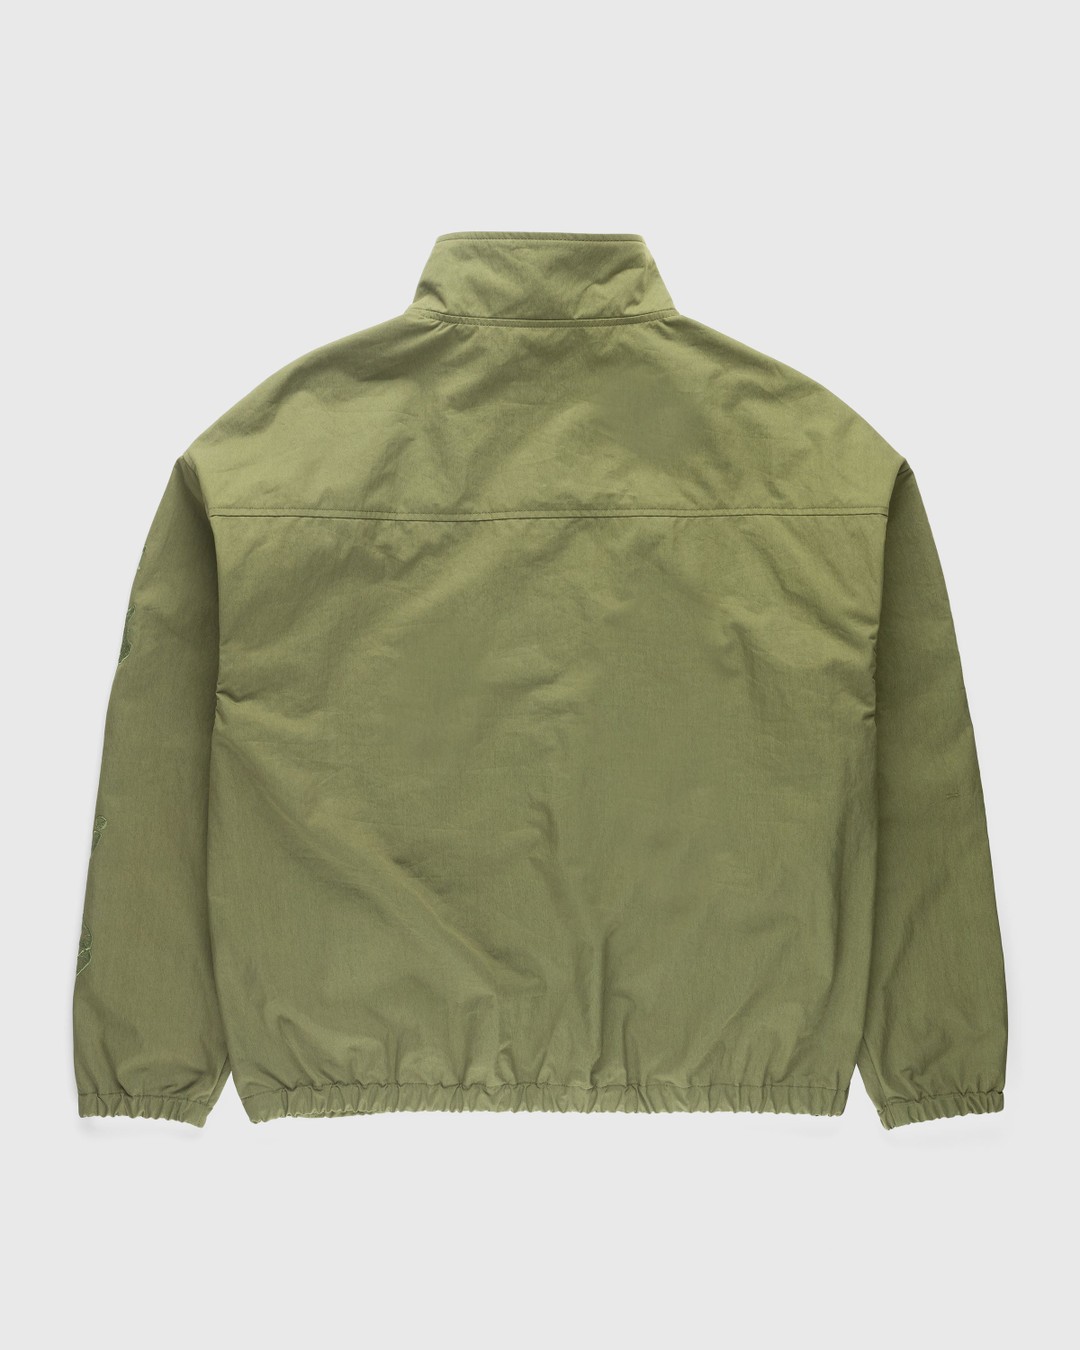 NTS x Highsnobiety – Brushed Nylon Track Jacket Green - Outerwear - Green - Image 2